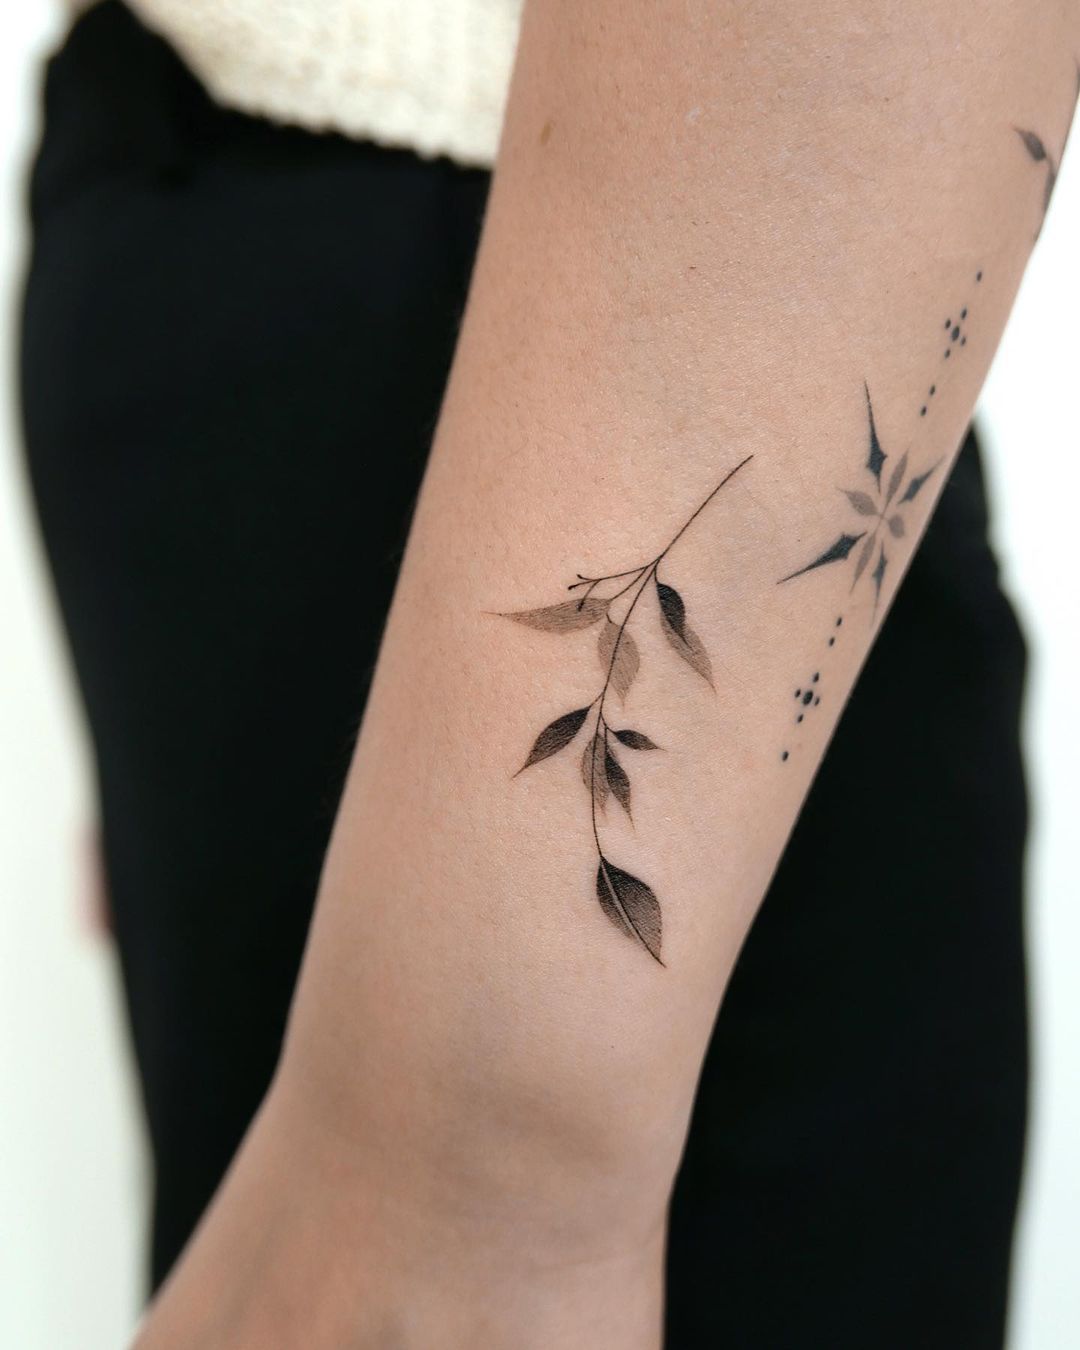 Small leaves by tattooist kam4